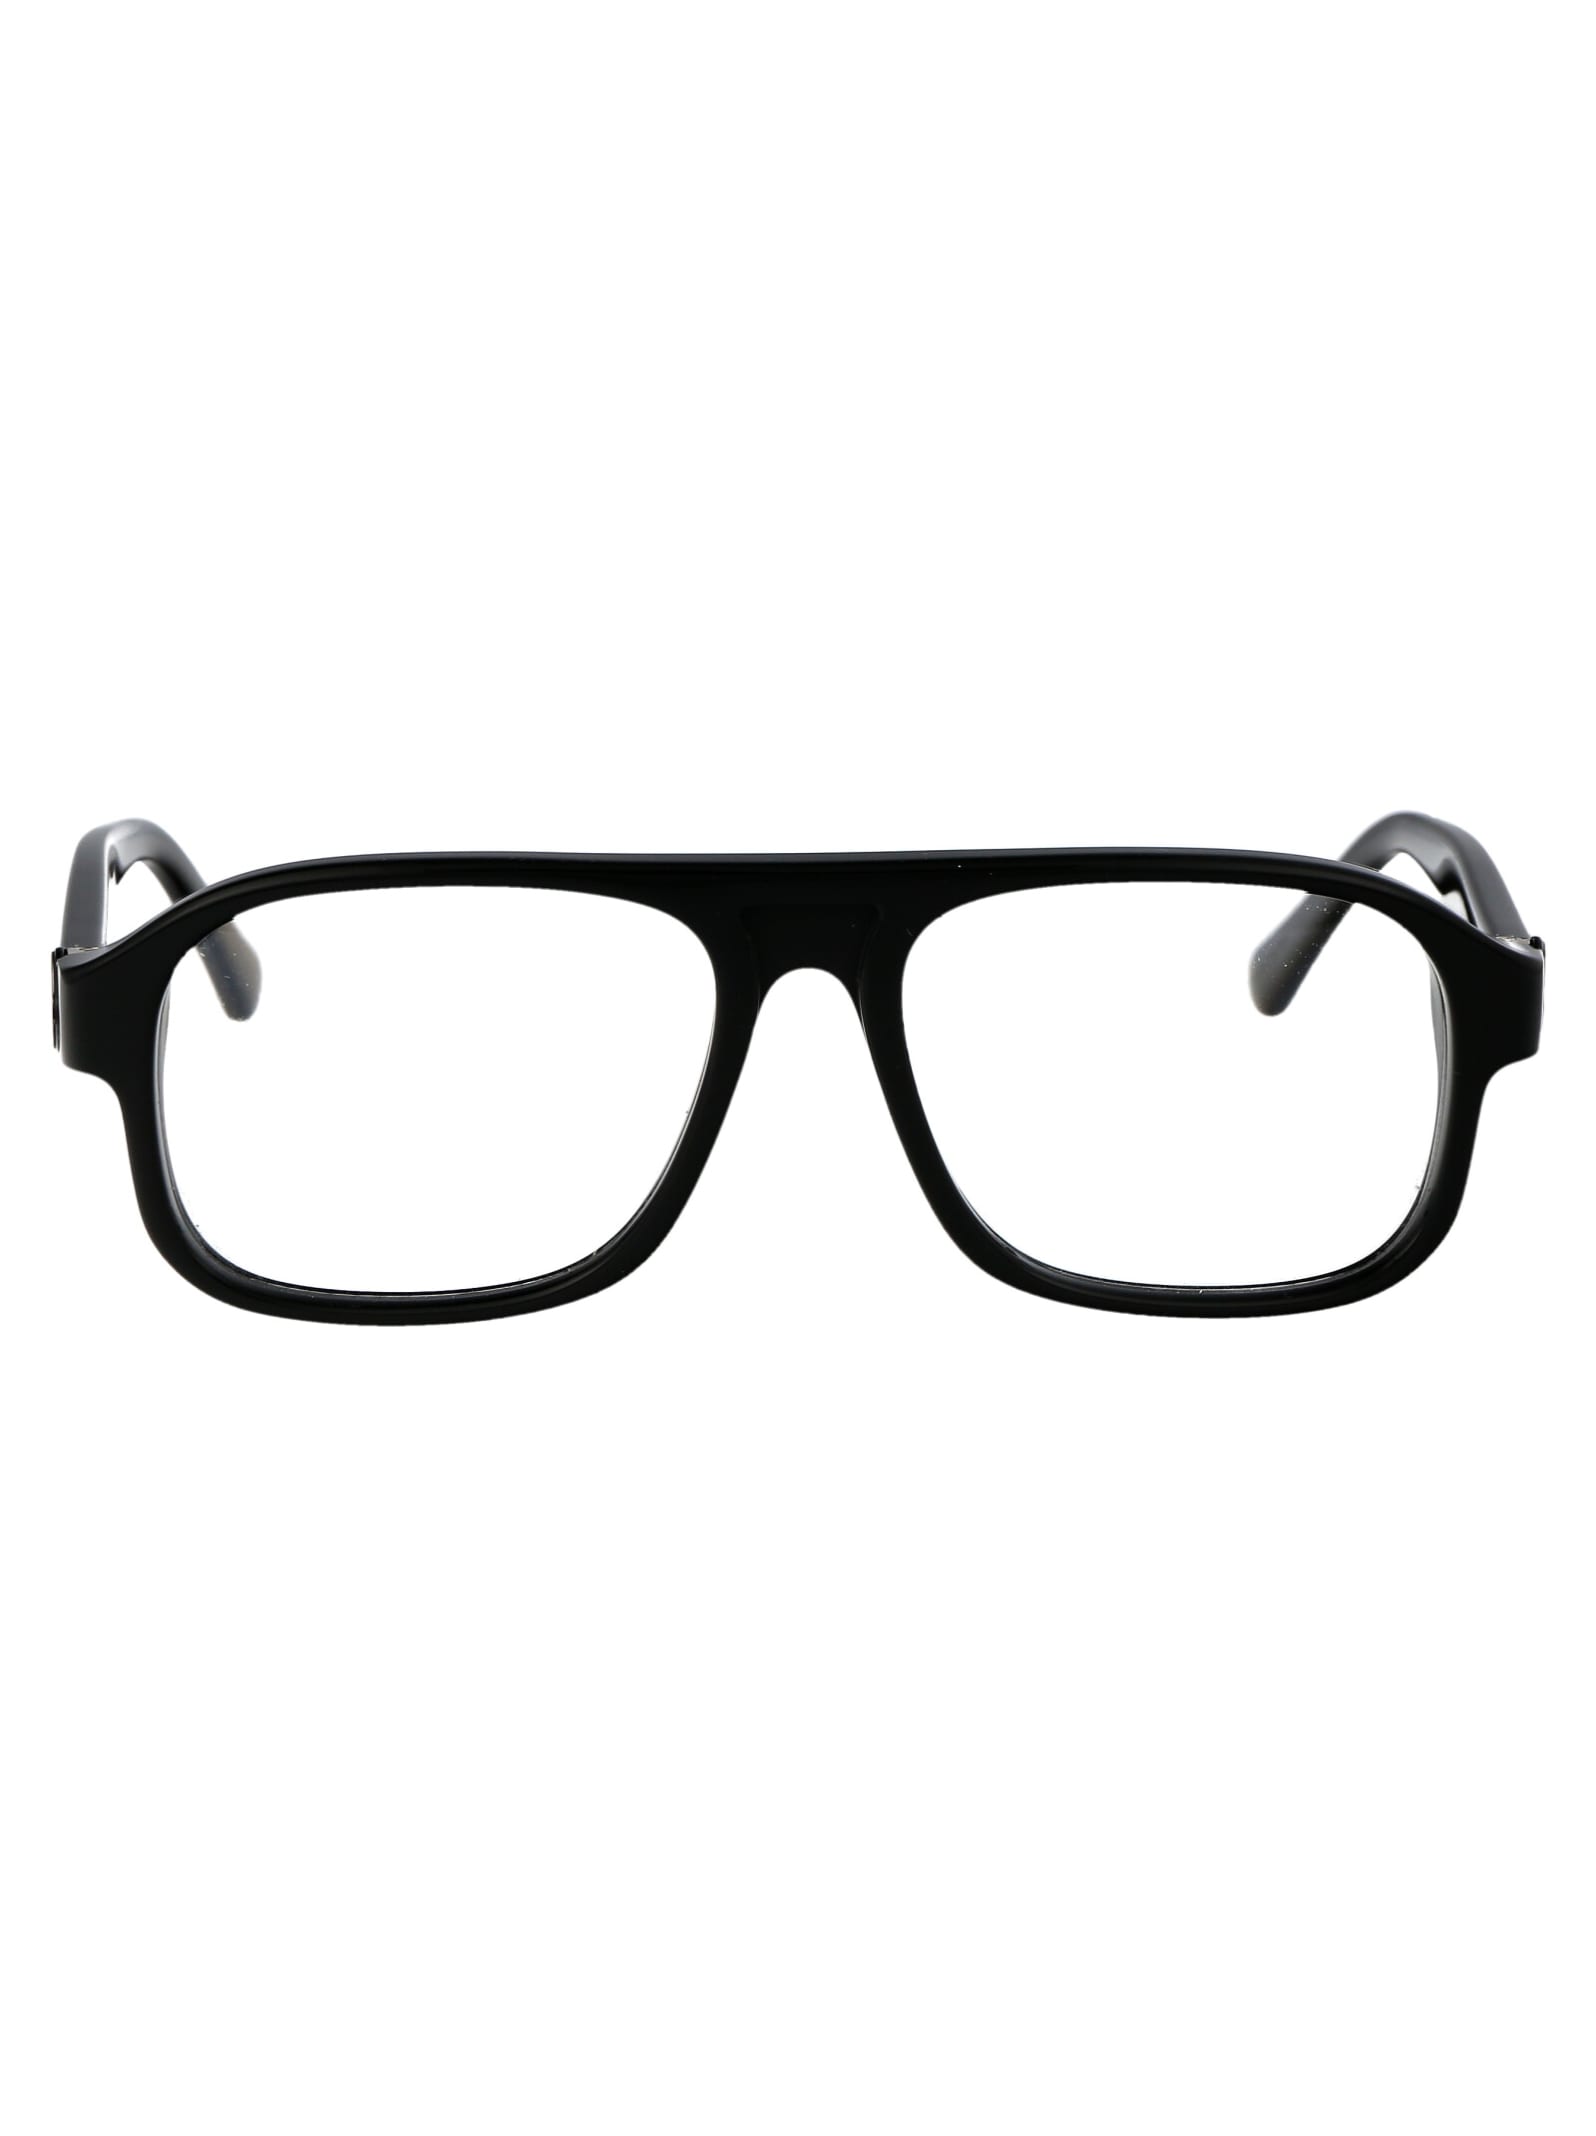 Ml5198 Glasses